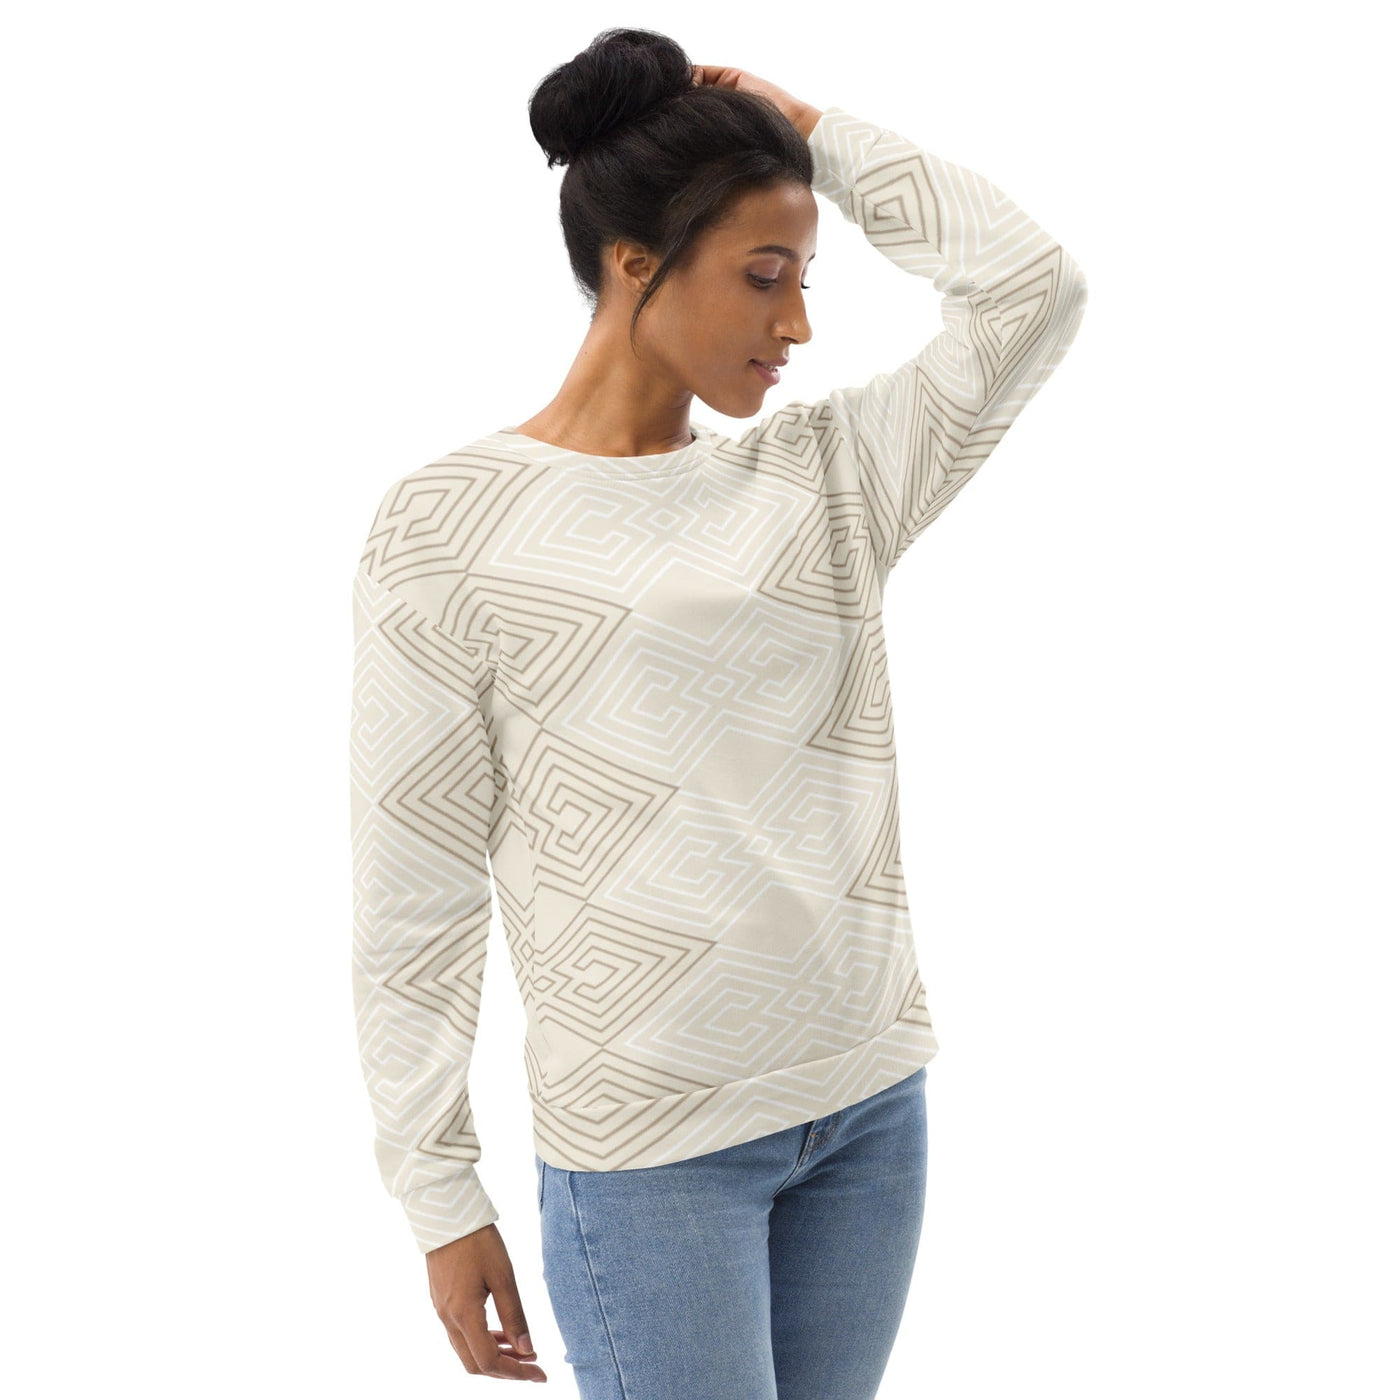 Graphic Sweatshirt For Women Beige And White Tribal Geometric Aztec - Womens